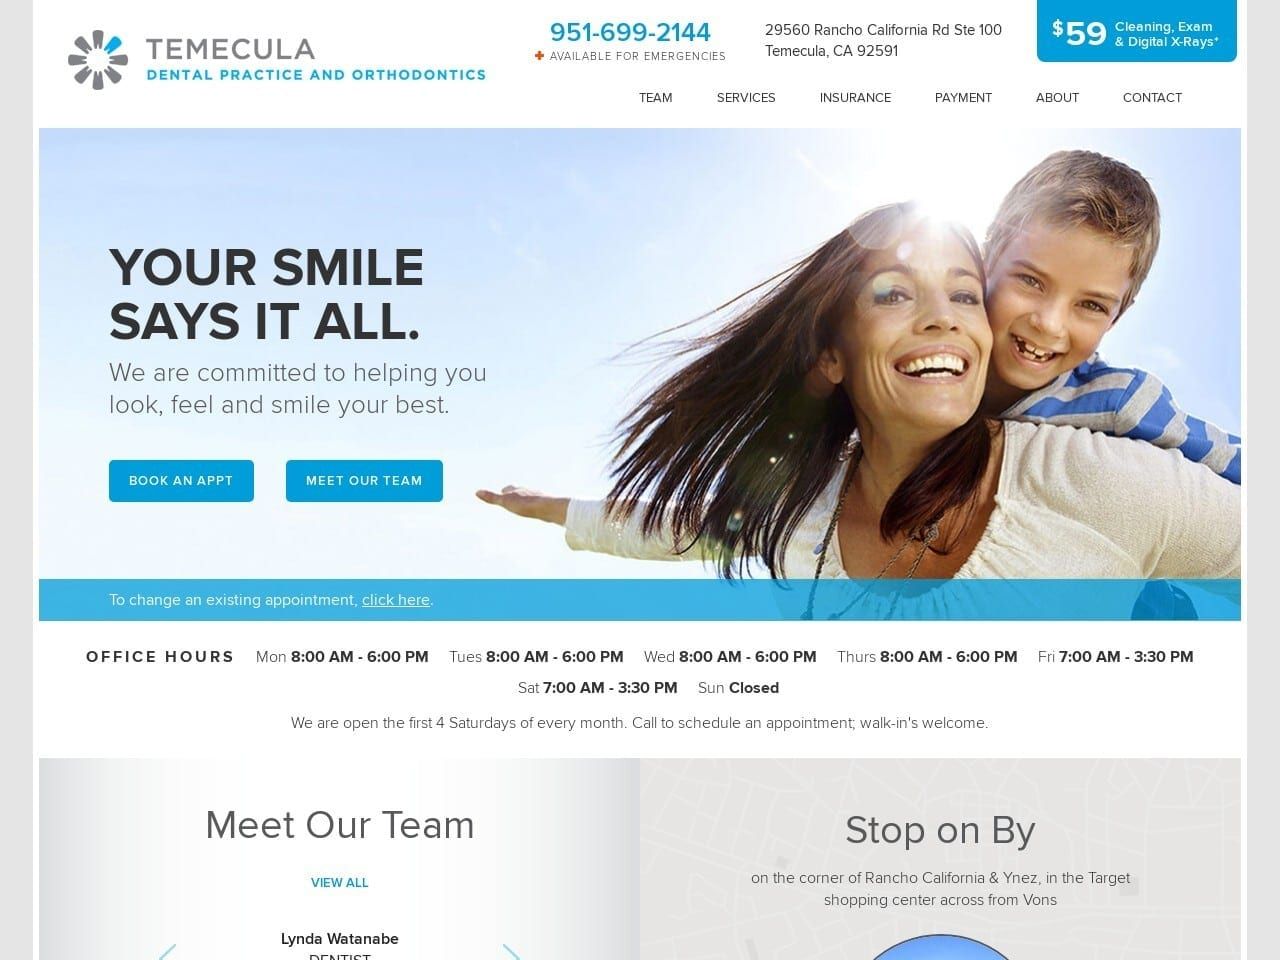 Temecula Dental Website Screenshot from temeculadental.com